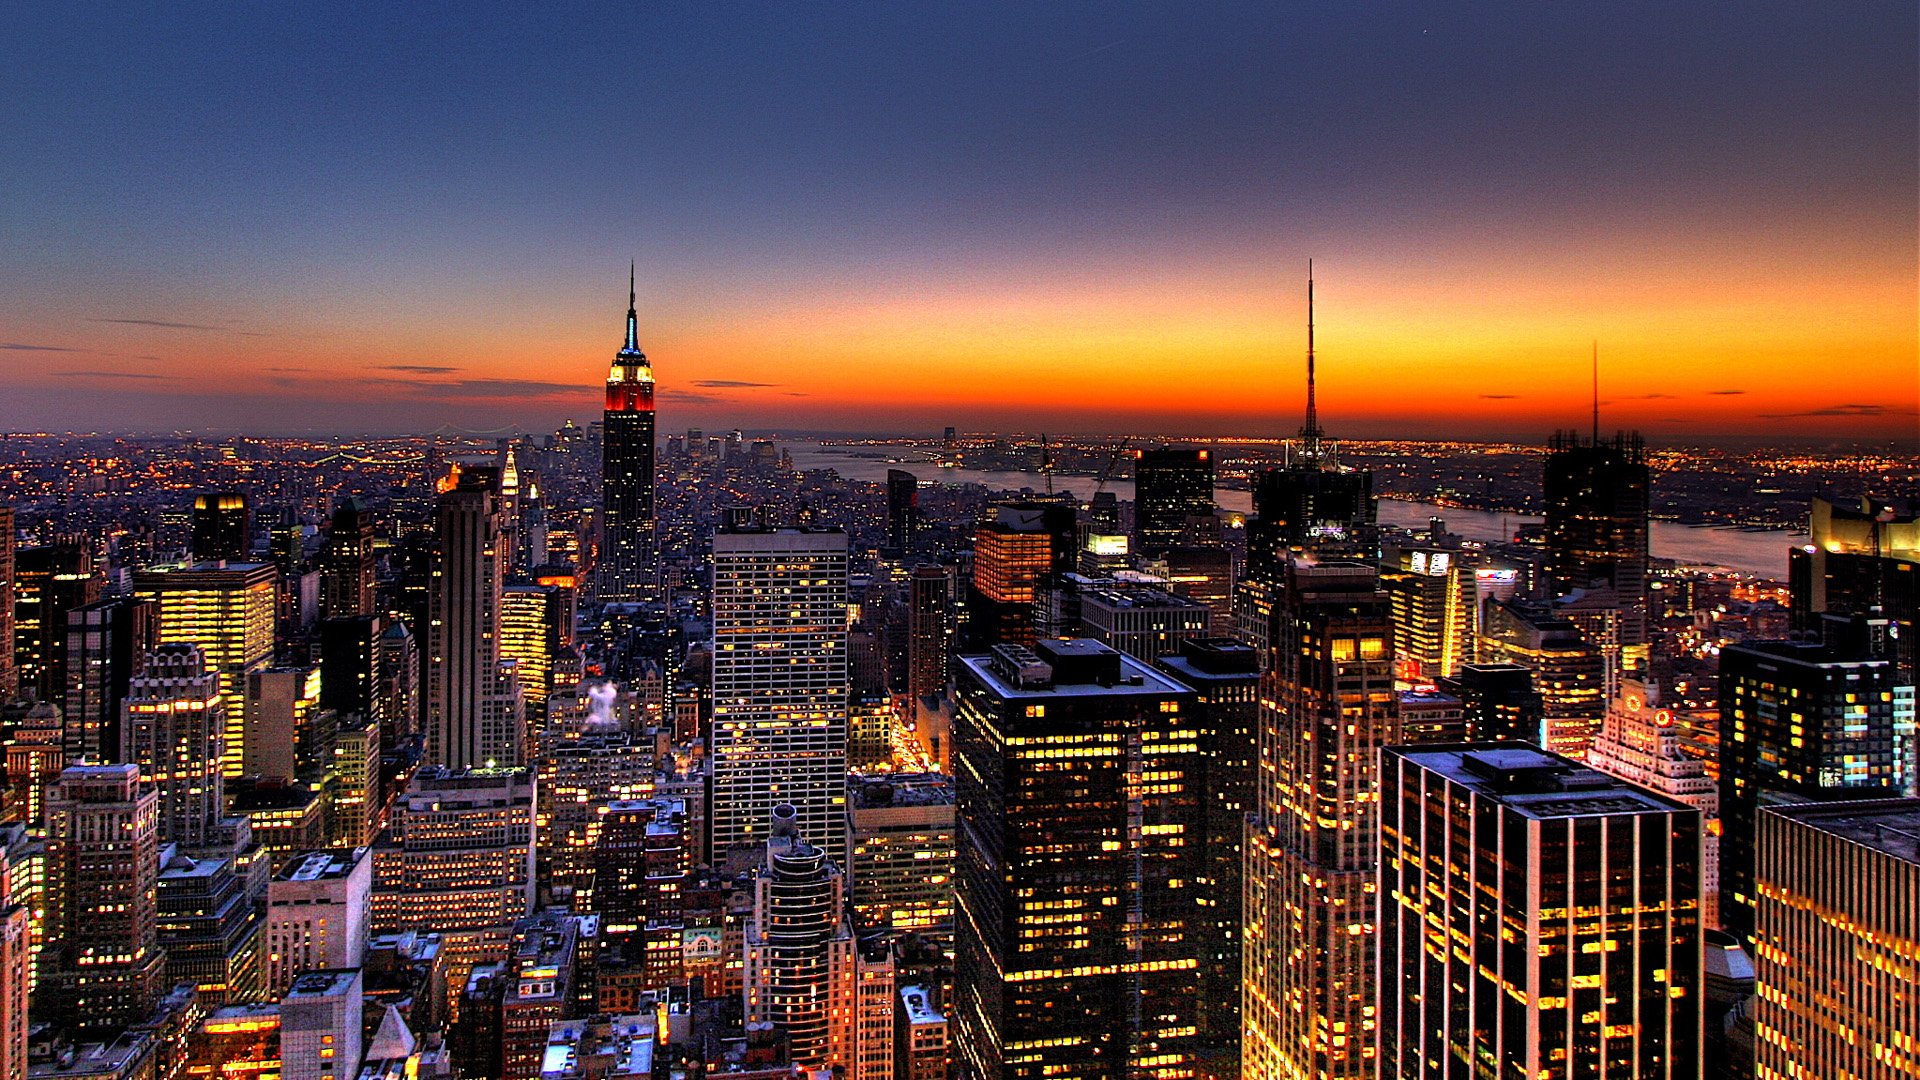 NYC Skyline Wallpaper at Night HD wallpaper background